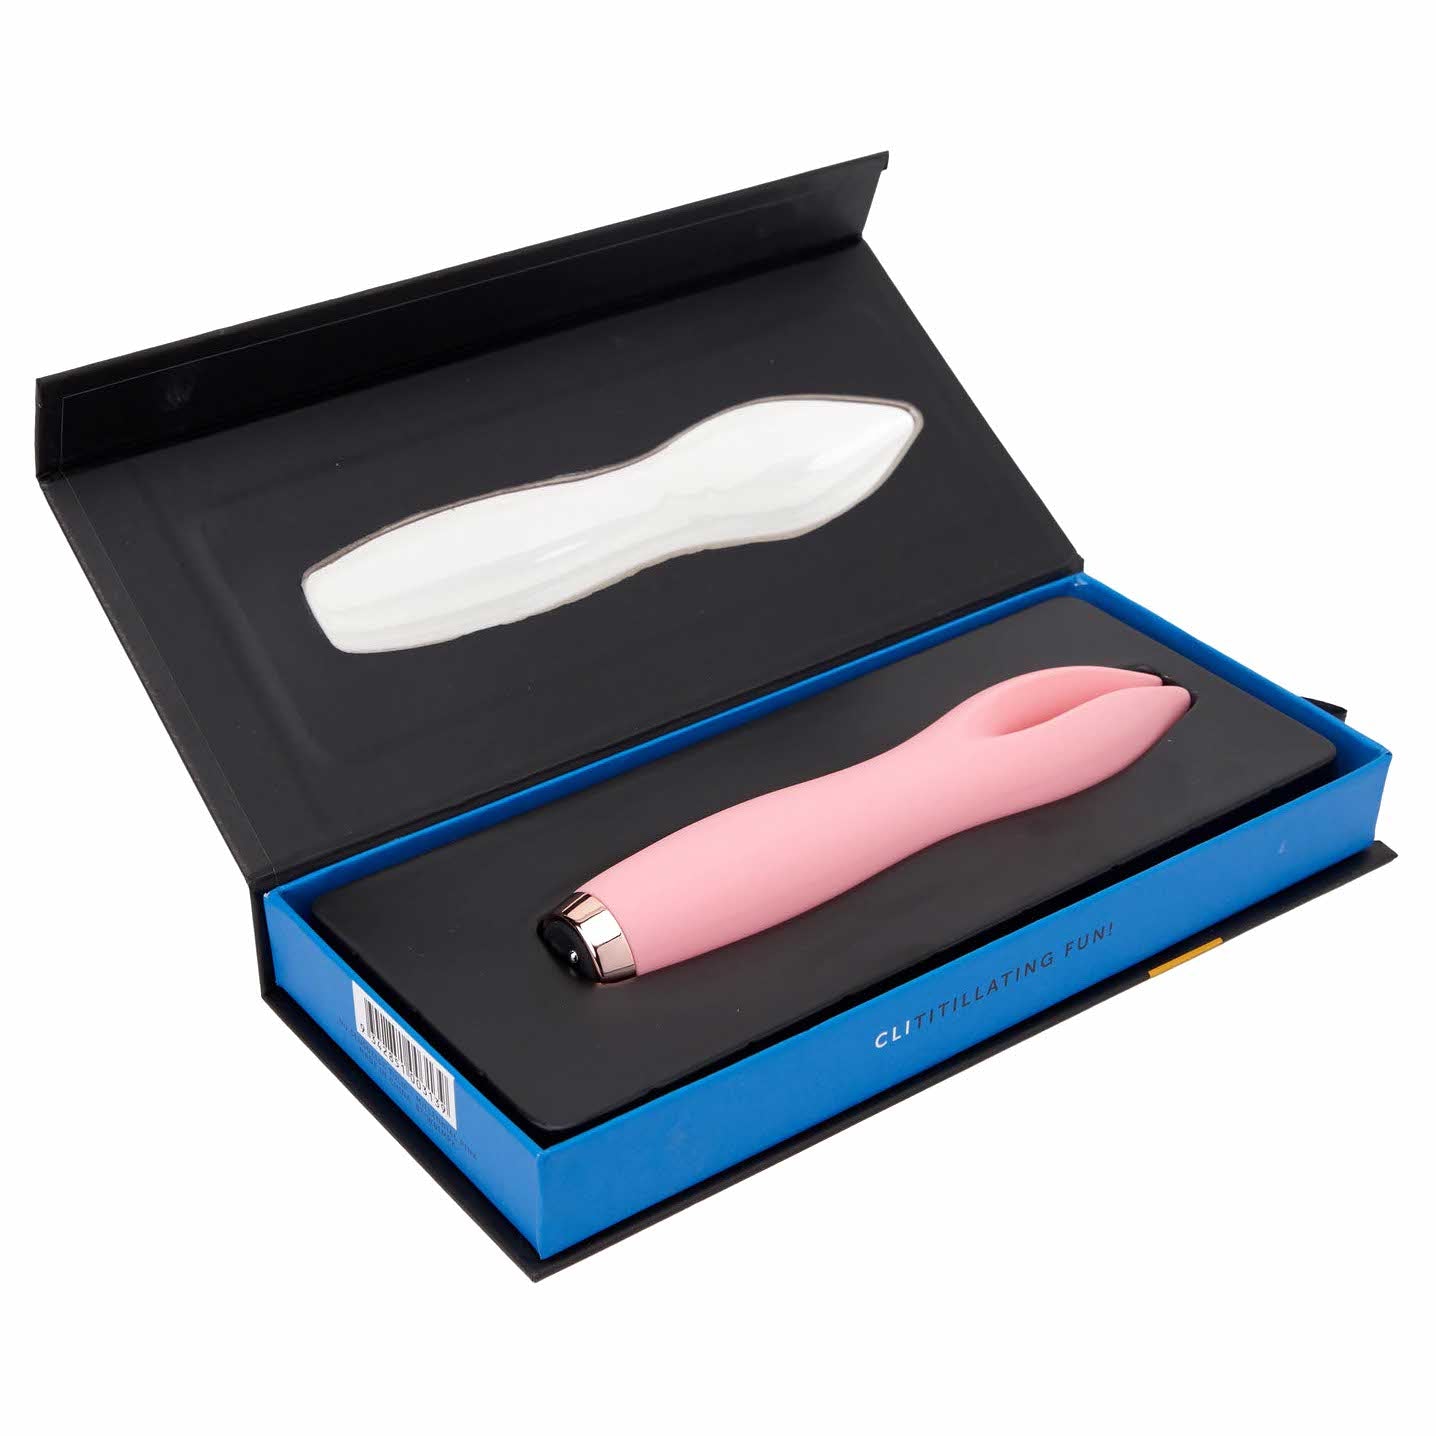 open box of the nu sensuelle tulip bt-w81mpk millenial pink